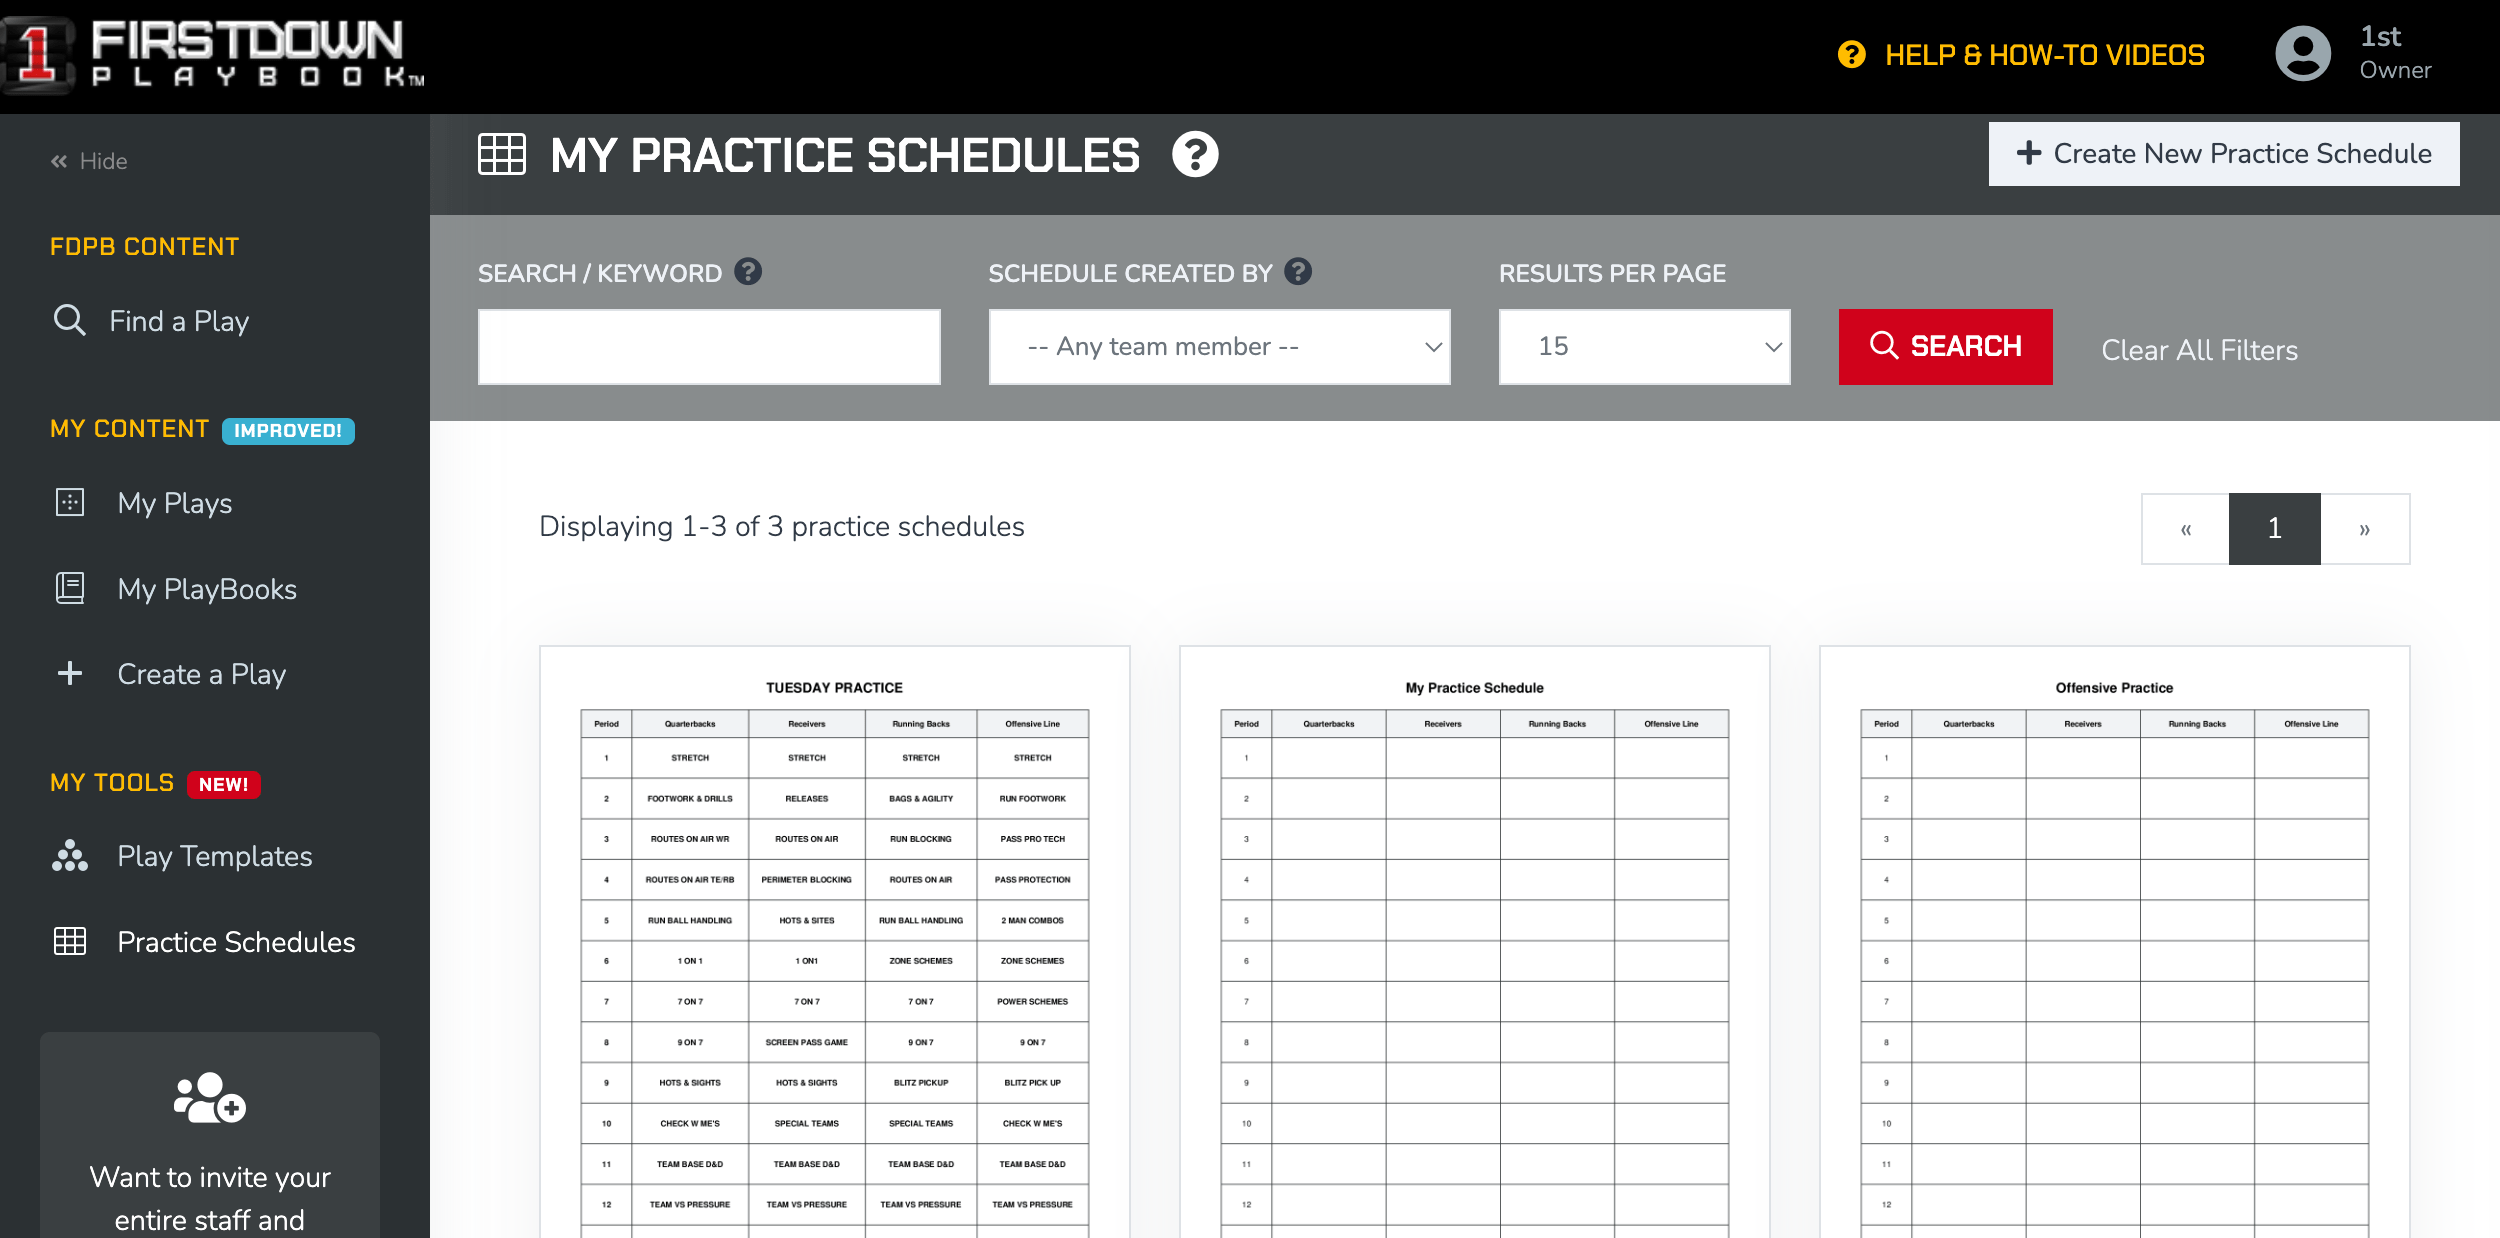 New! My Tools & Practice Schedules